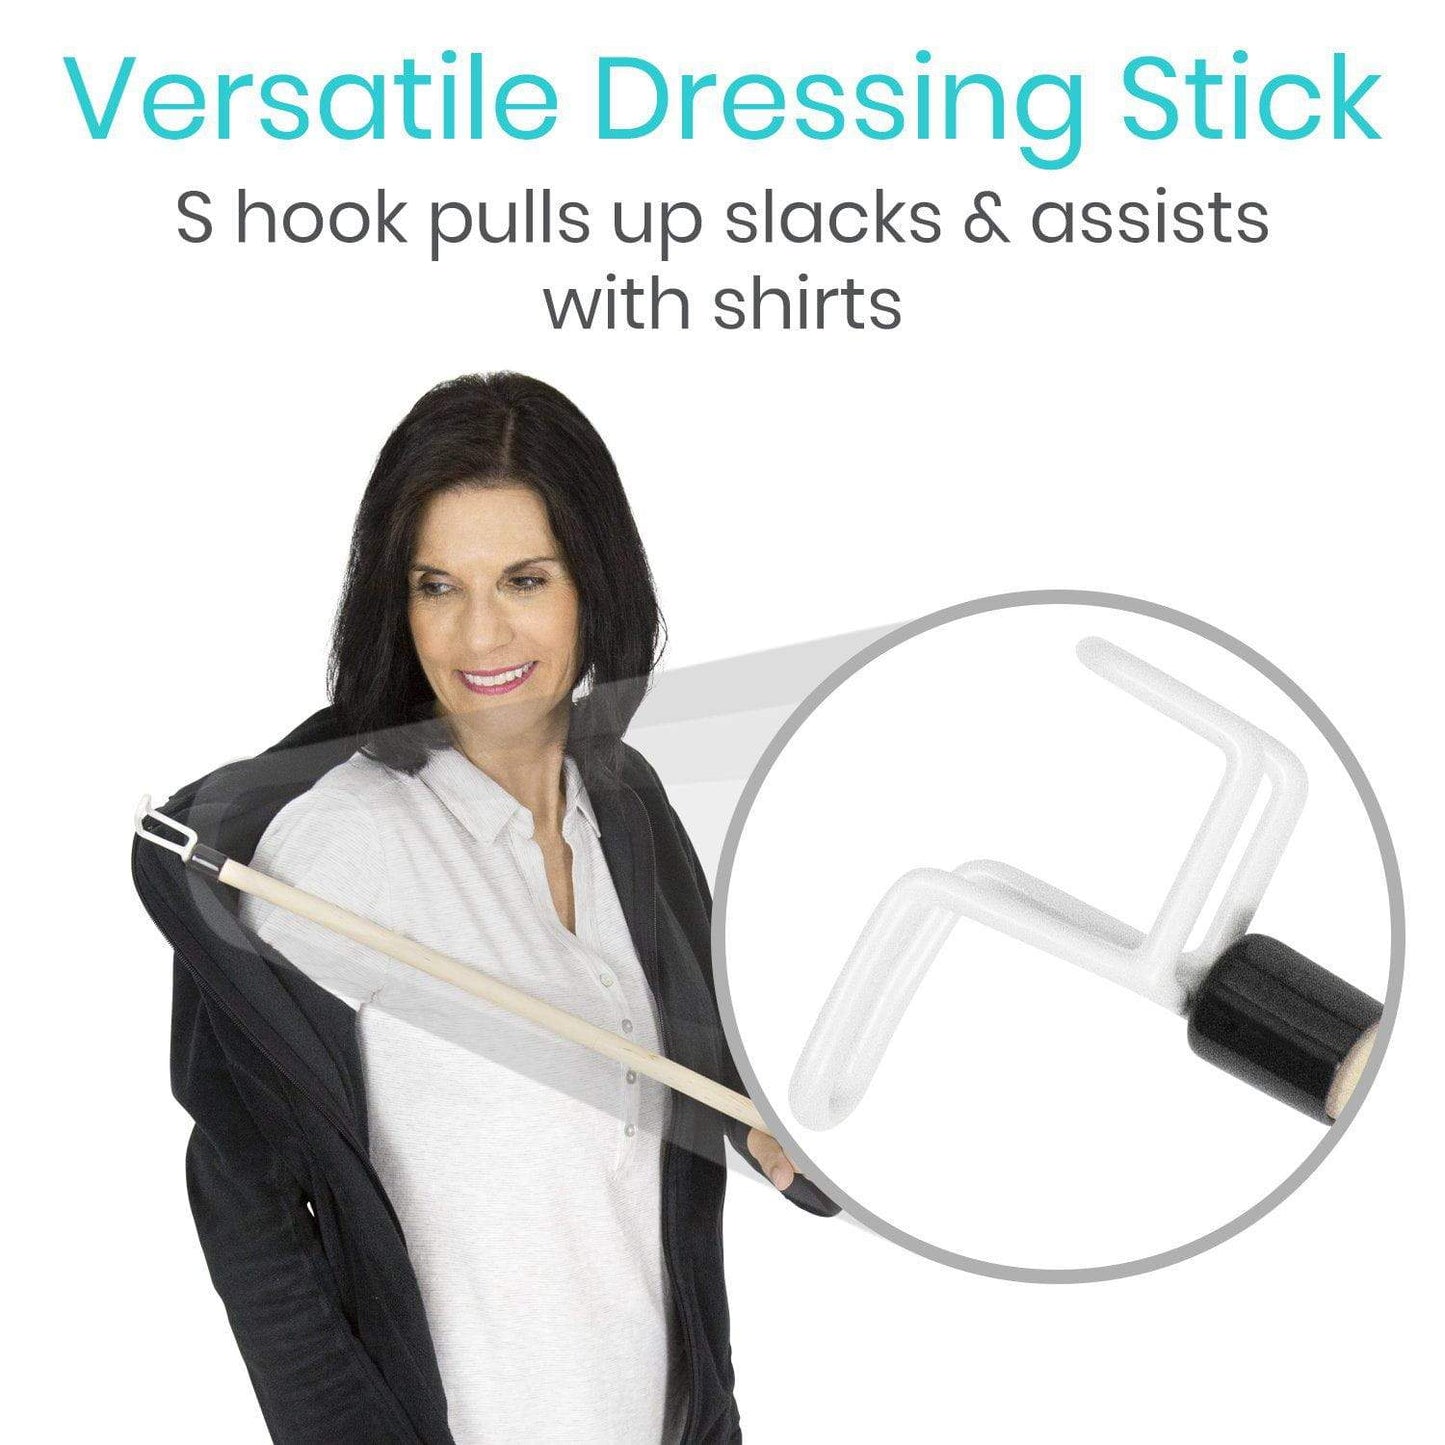 Dressing Stick